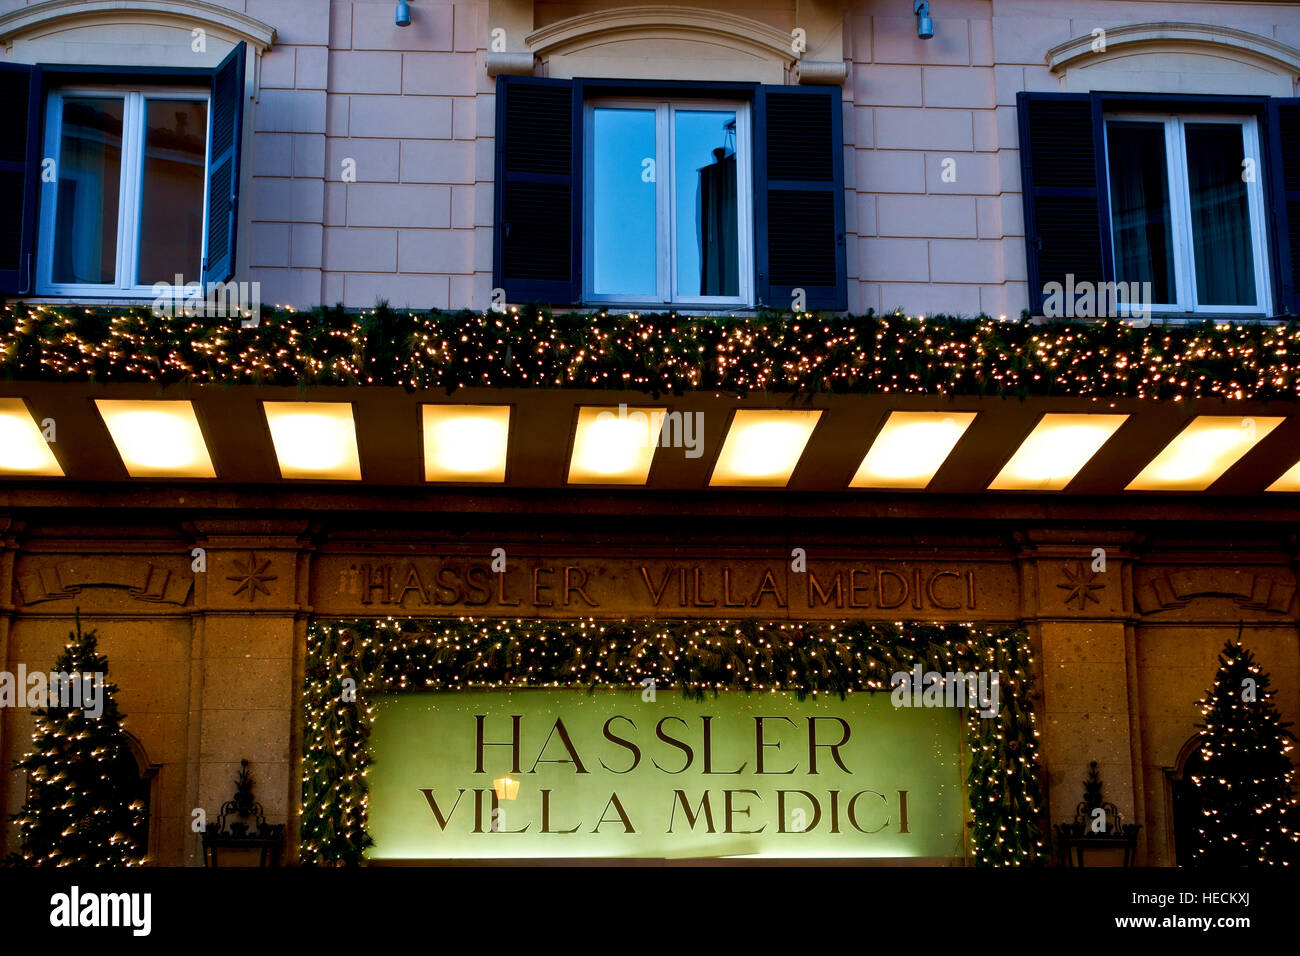 Hassler Villa Medici Hoteleingang zur Weihnachtszeit. Luxuriöses Hotel bei Nacht. Rom, Italien, Europa, EU. Wintersaison. Nahaufnahme, Detail Stockfoto